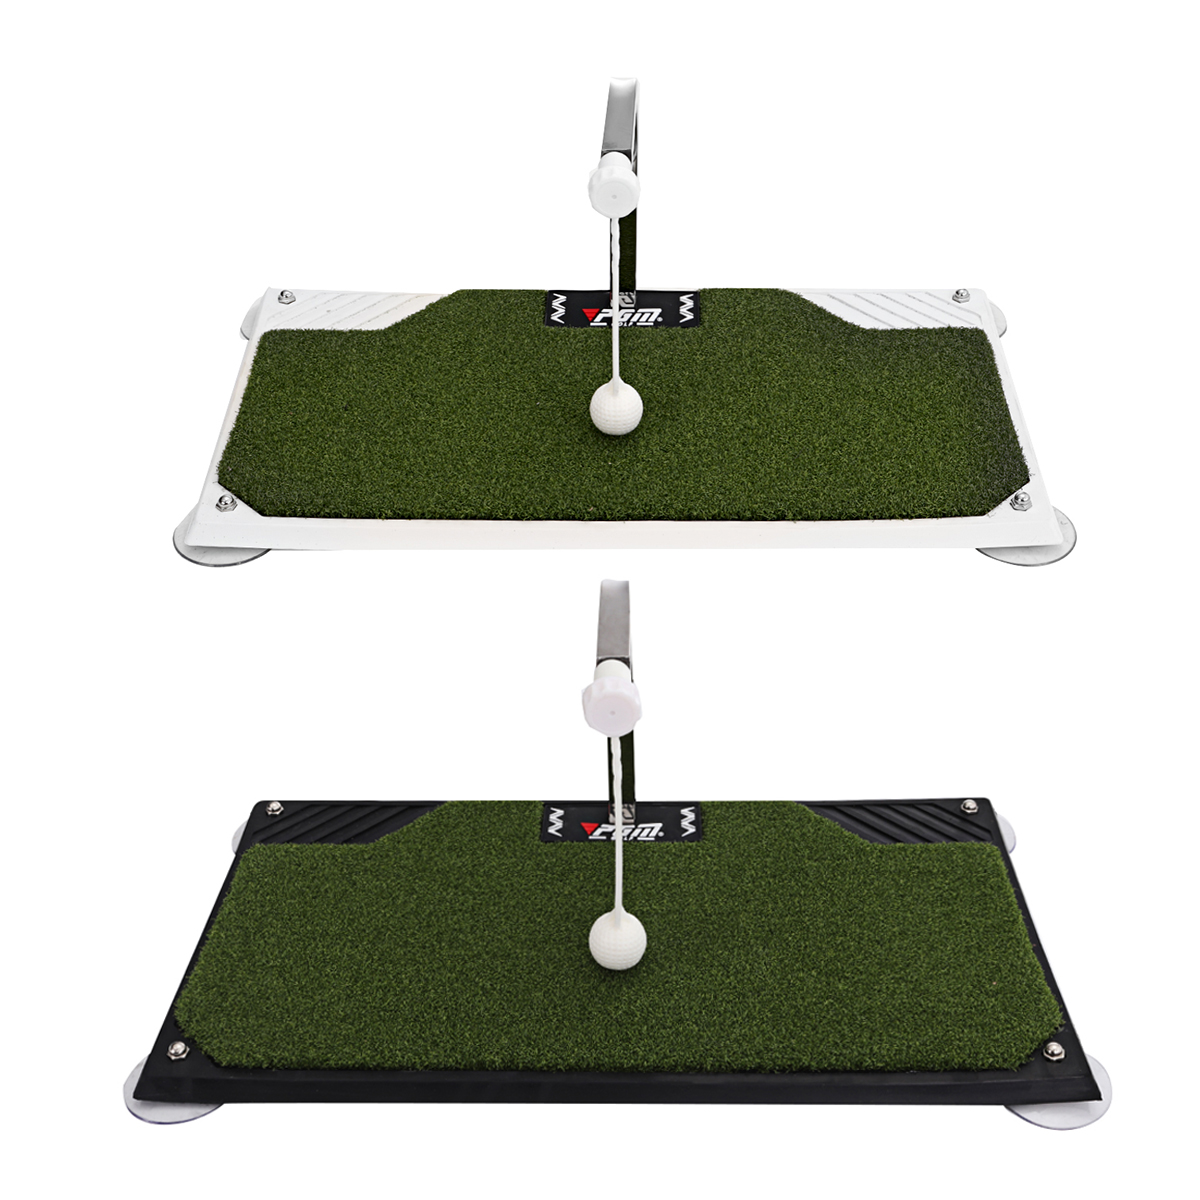 Professional-Golf-Swing-Training-Putting-360deg-Rotation-Golf-Practice-Mat-for-Beginners-1849774-7